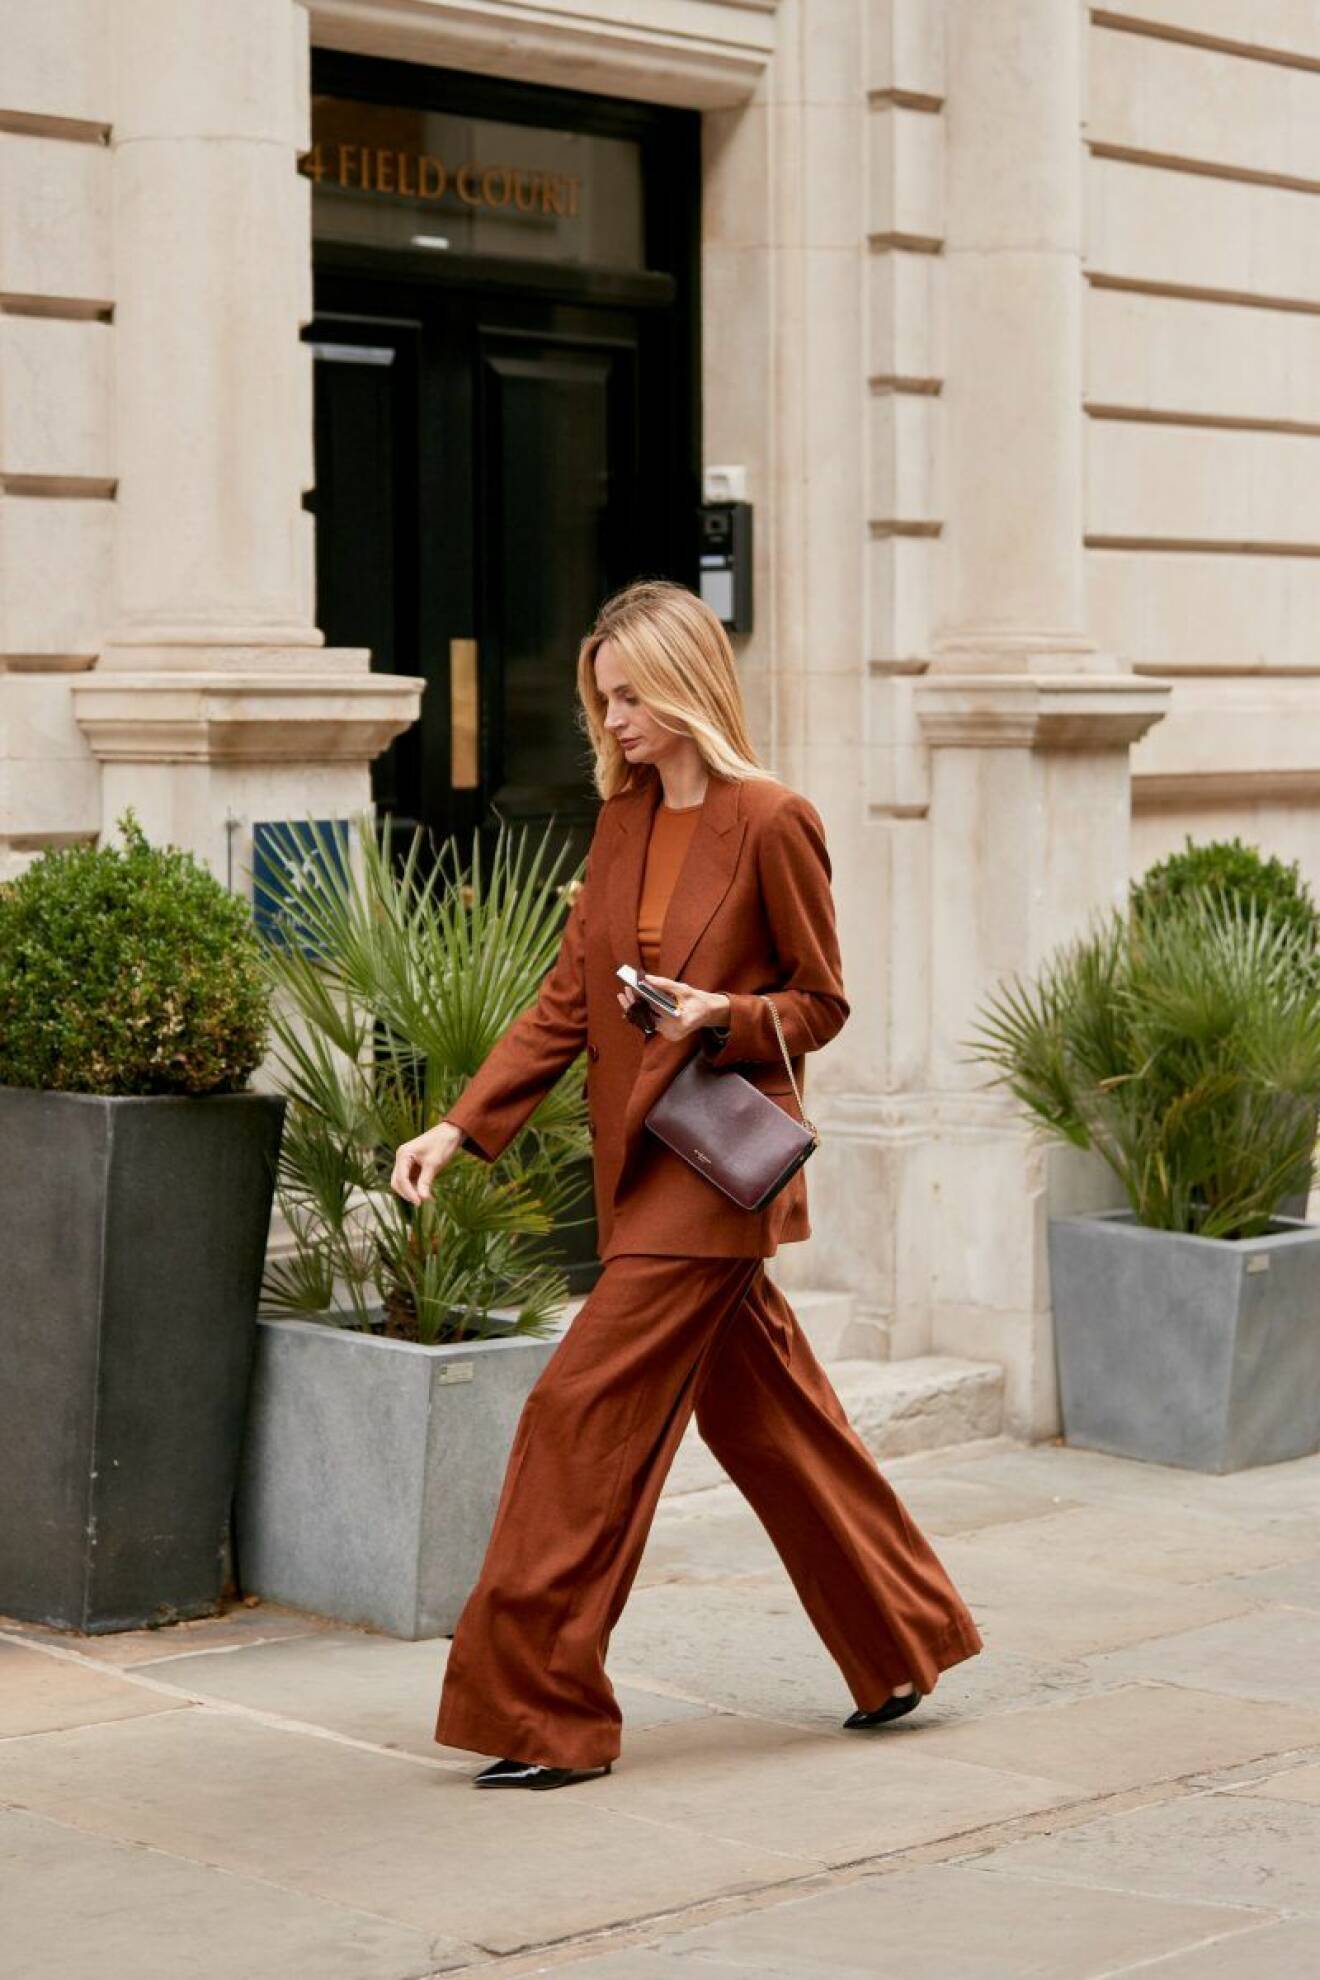 Streetstyle från London Fashion Week, rostbrun outfit